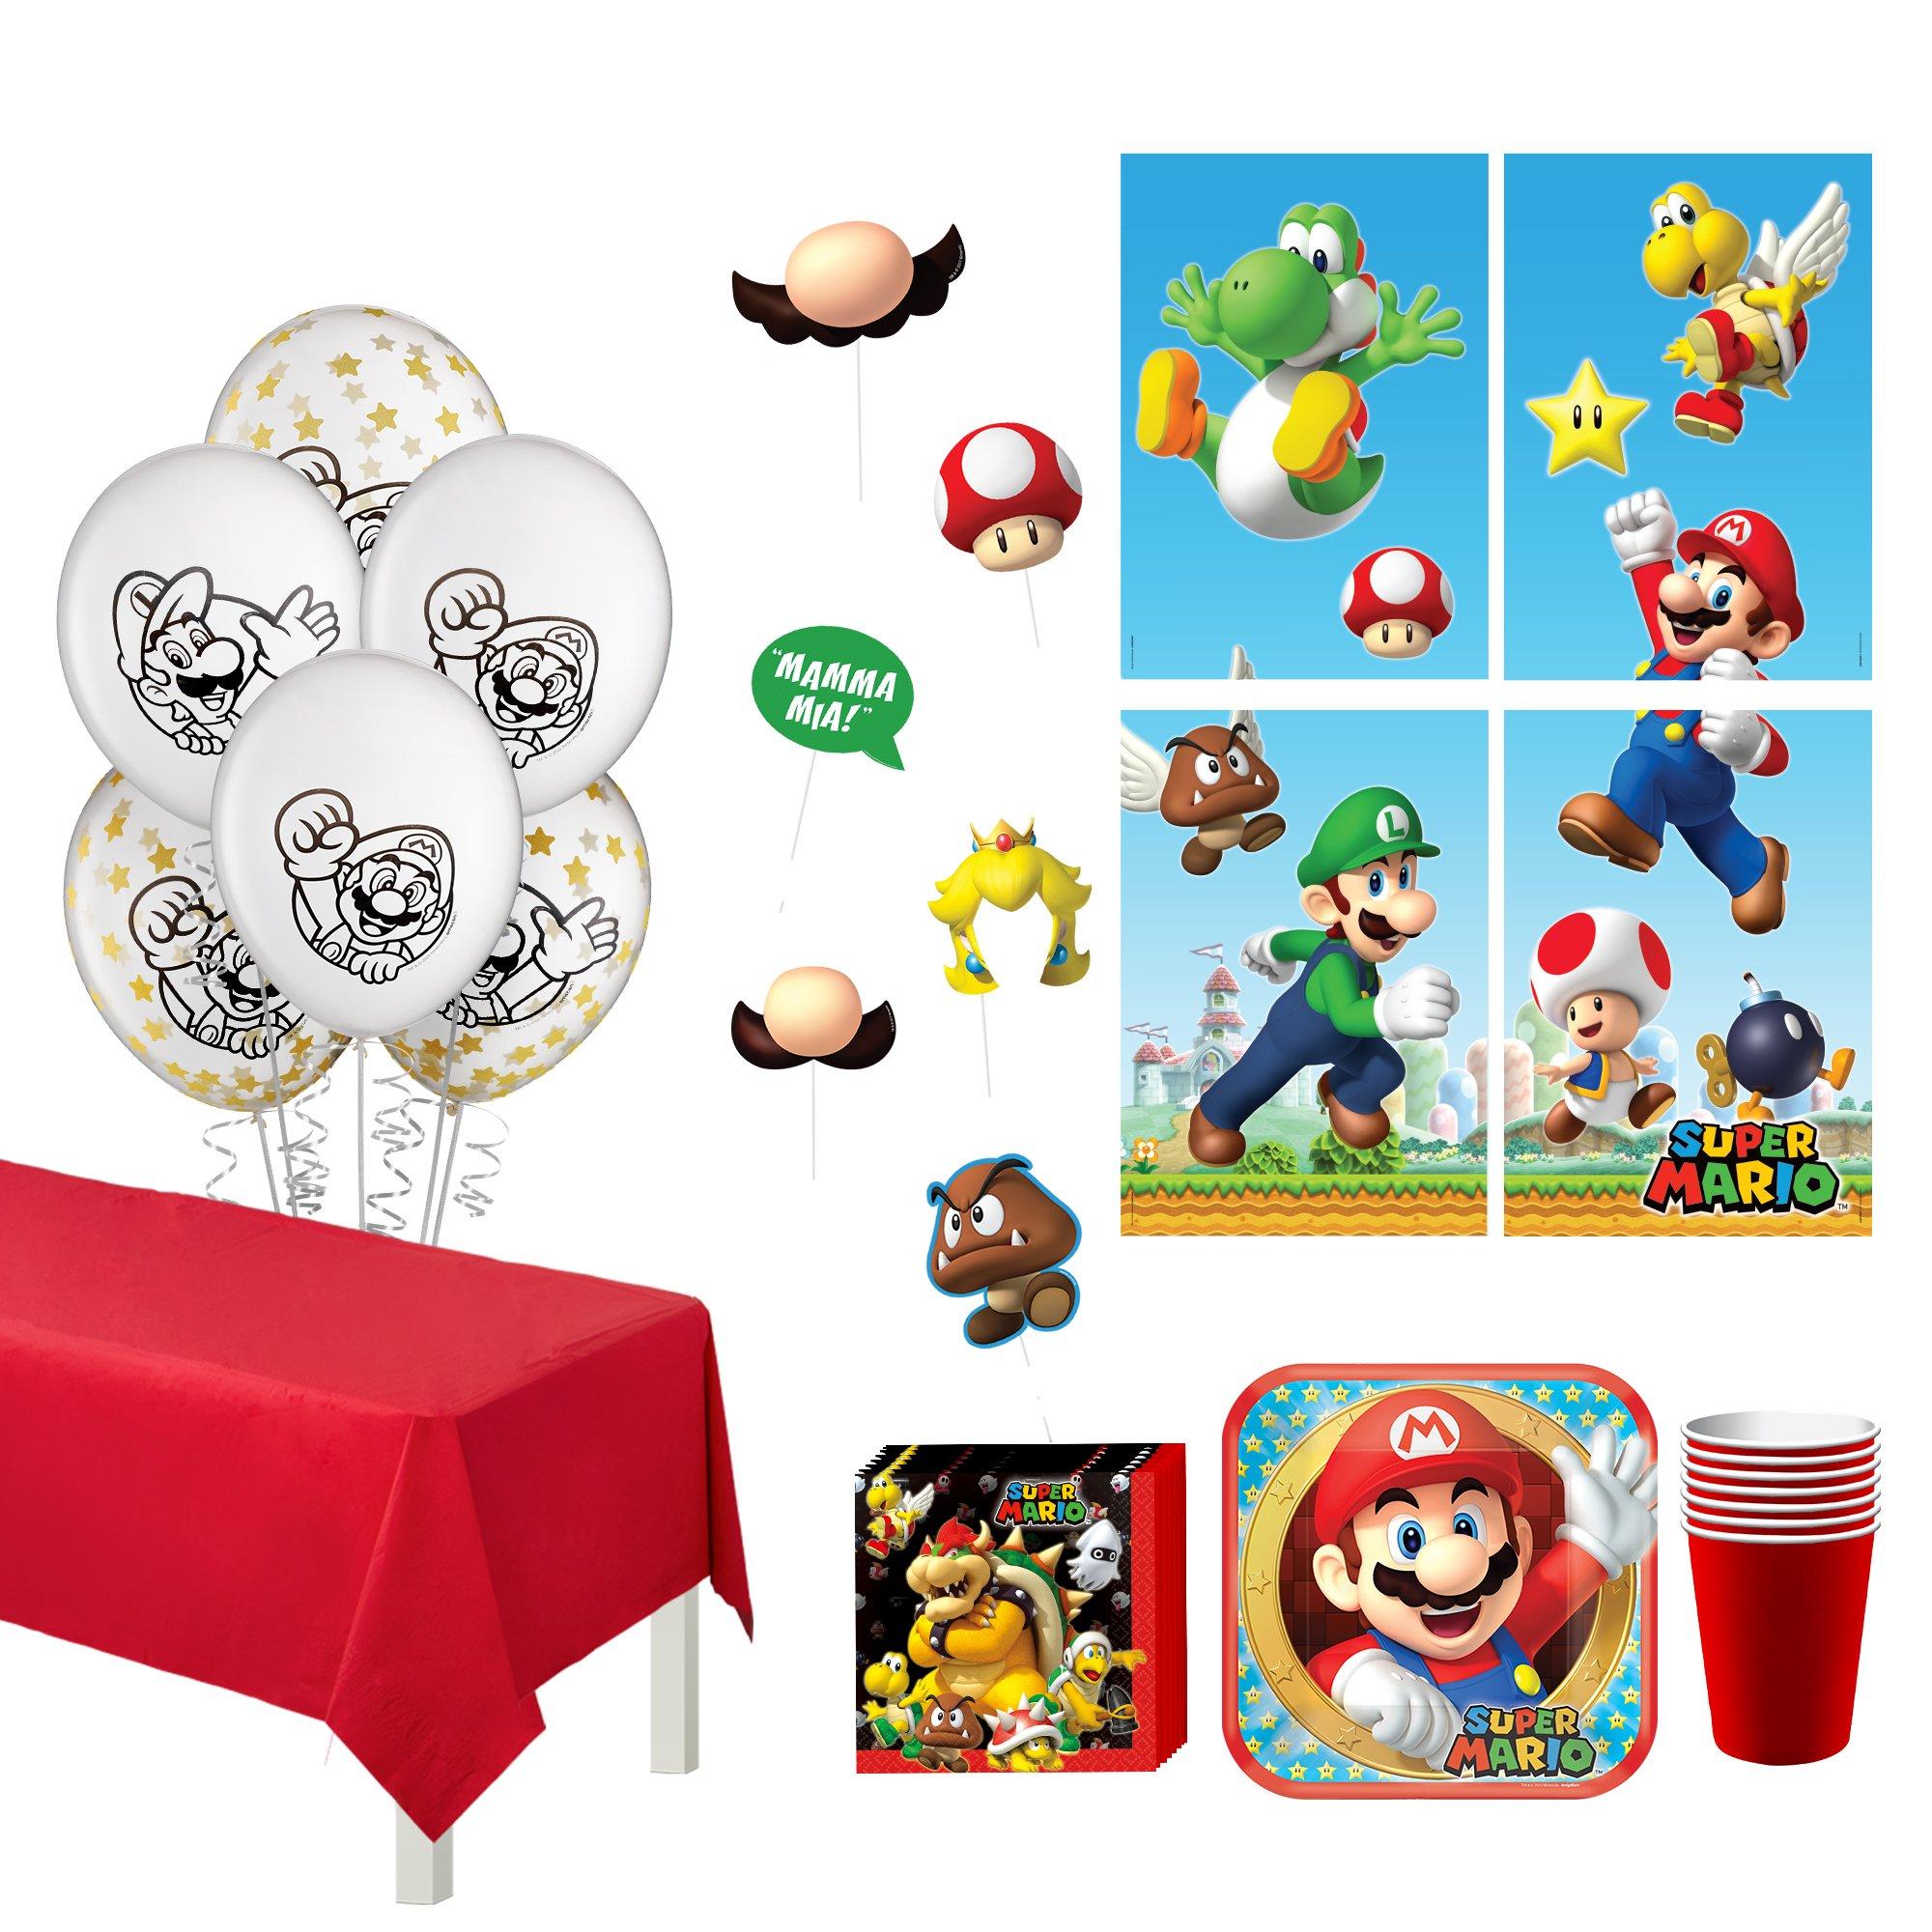 Mario Bros birthday party ideas: Level up the fun! - A Pretty Celebration